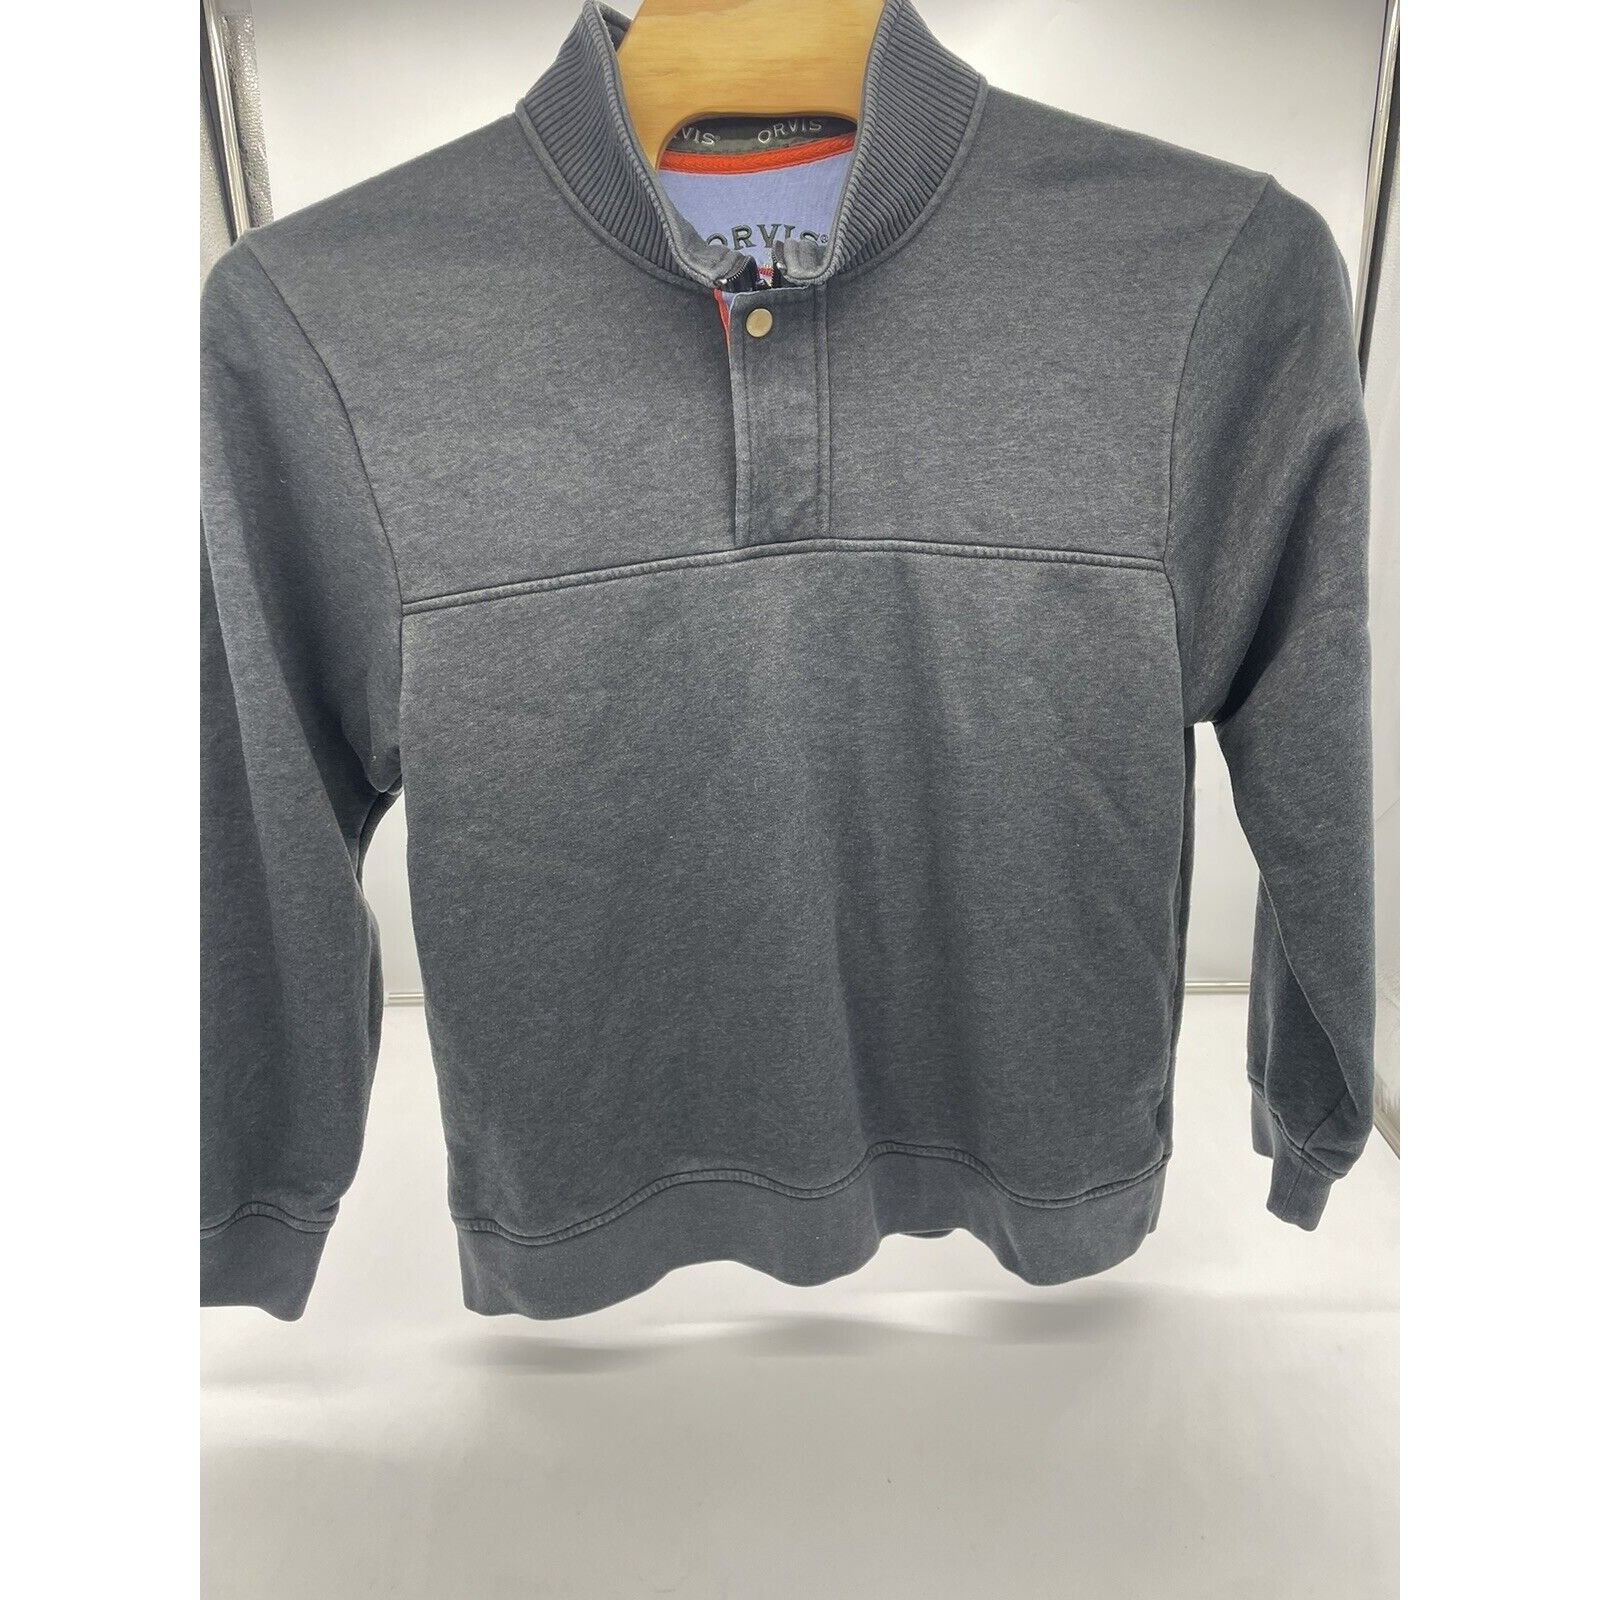 Orvis Orvis Men's Fleece Pullover Sz XL Gray 1/4 Zip Snap Sweatshi Size US XL / EU 56 / 4 - 4 Thumbnail